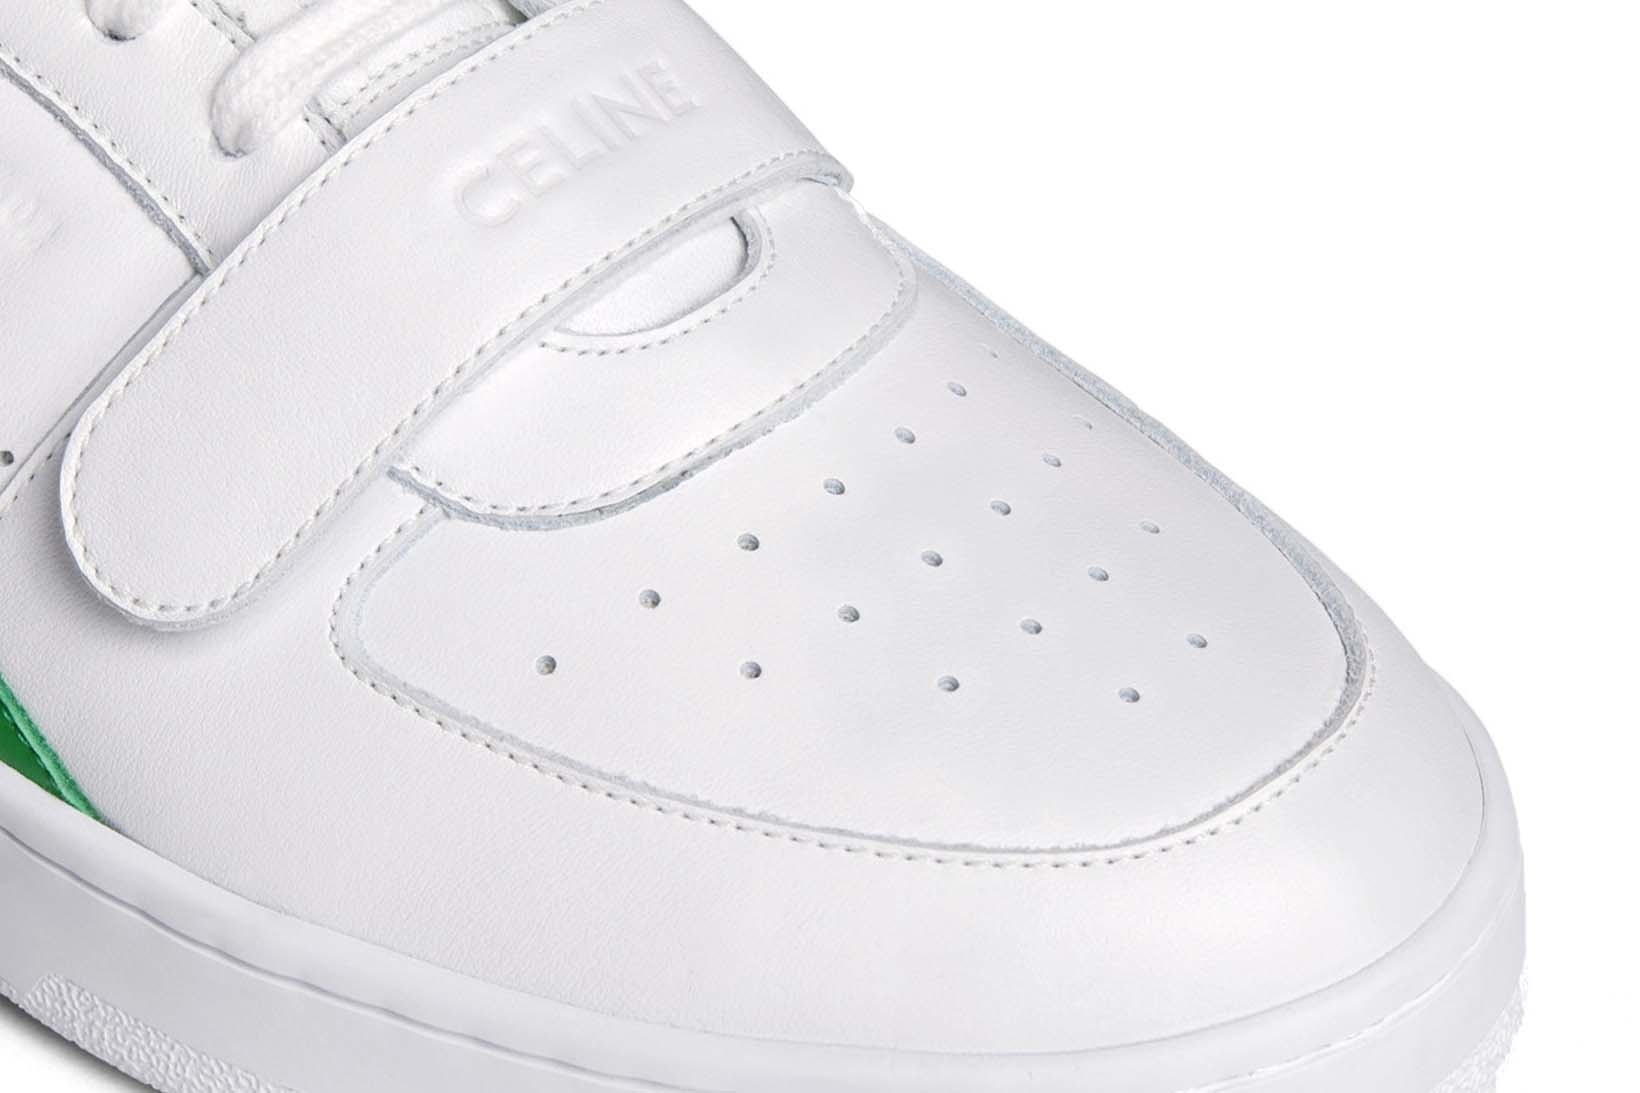 Celine CT-02 Mid Sneaker White Green Price Release Date